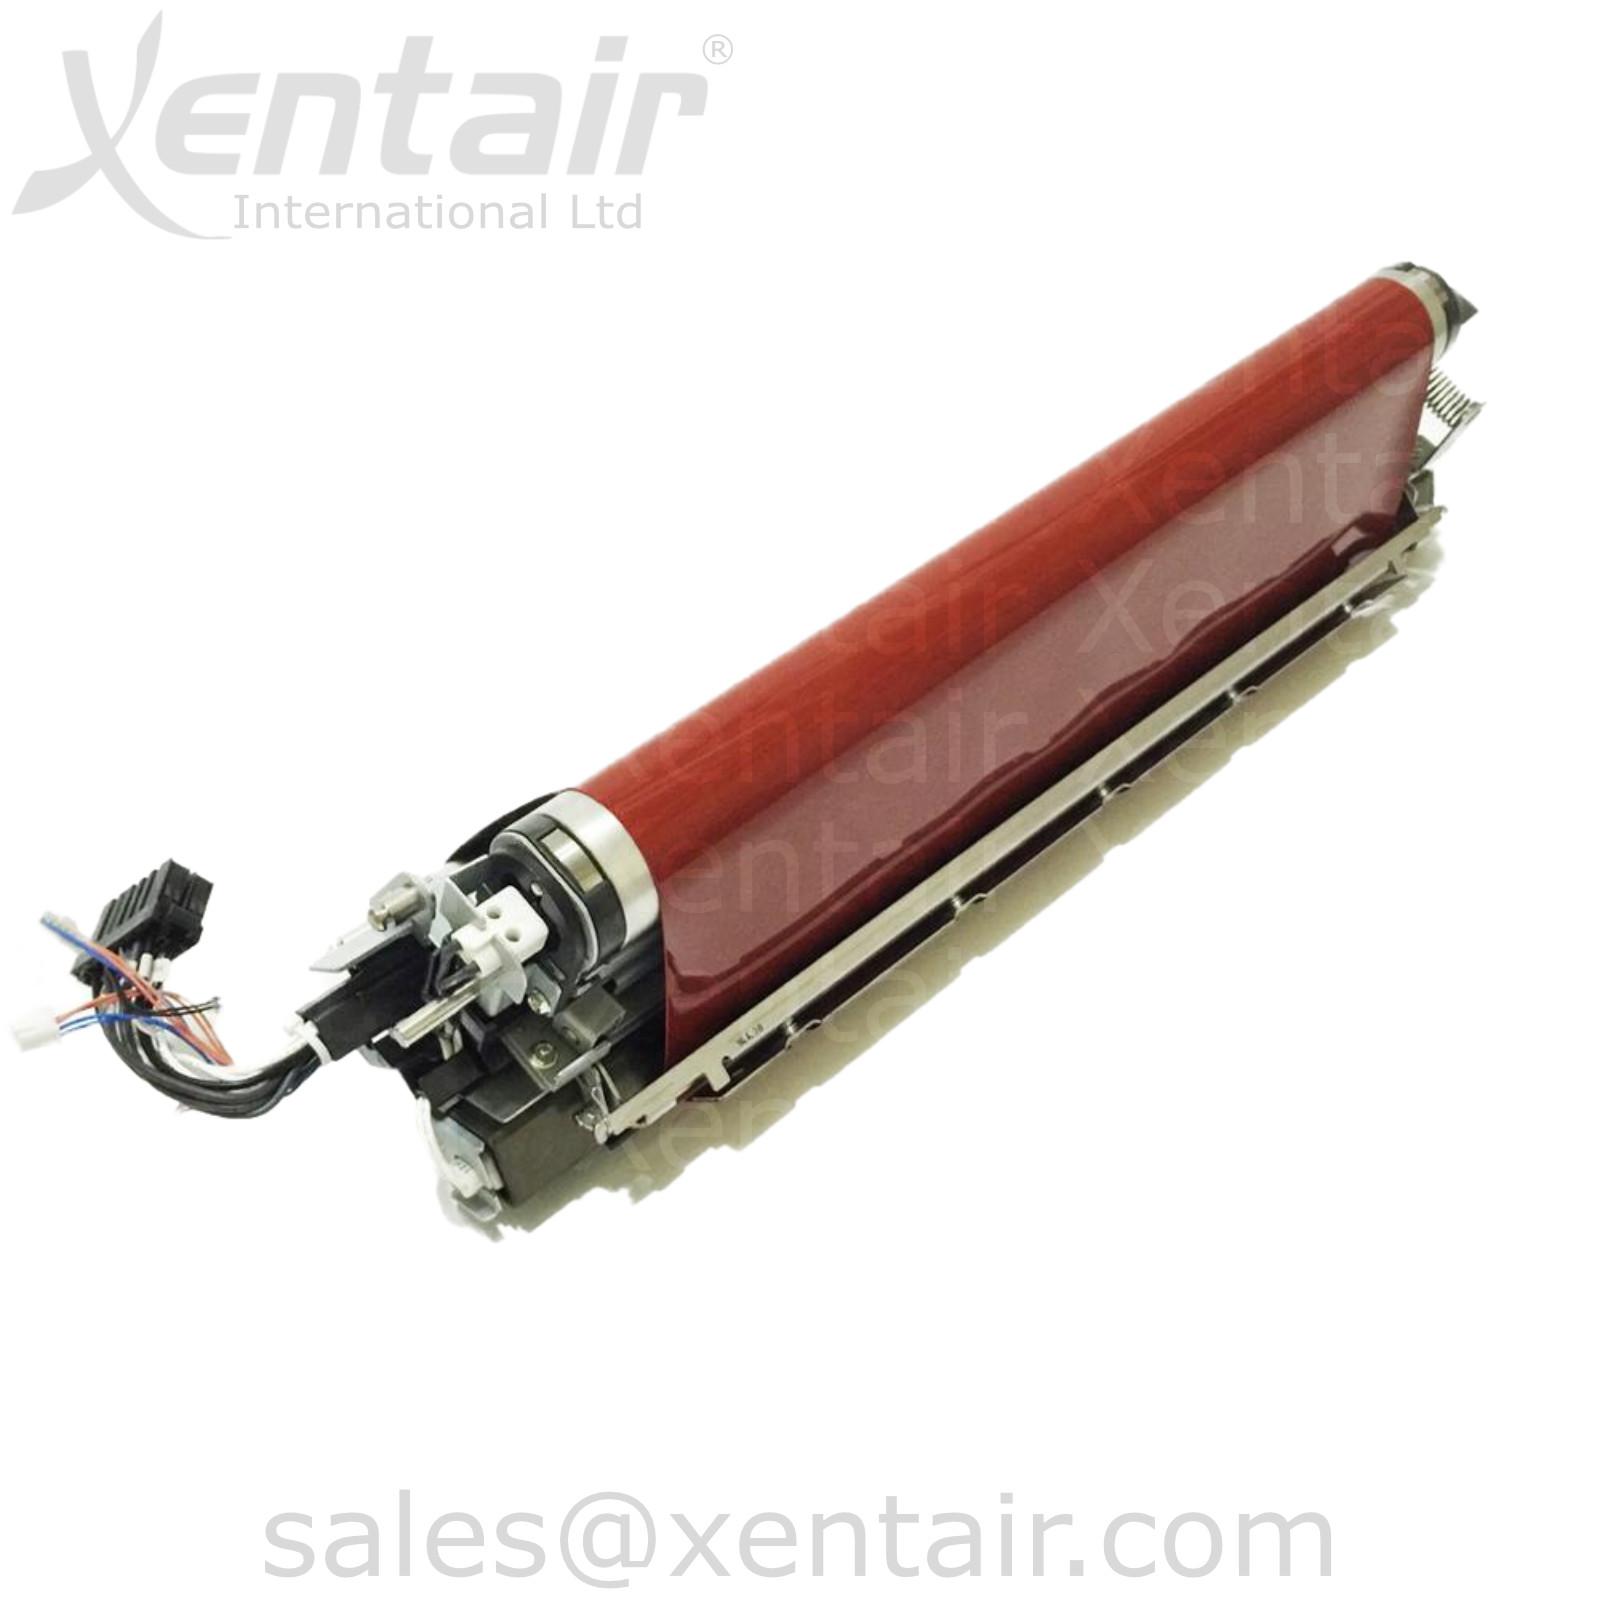 Xerox® Color 800 1000 Fuser Belt Assembly 604K62320 604K62321 604K62322 604K62323